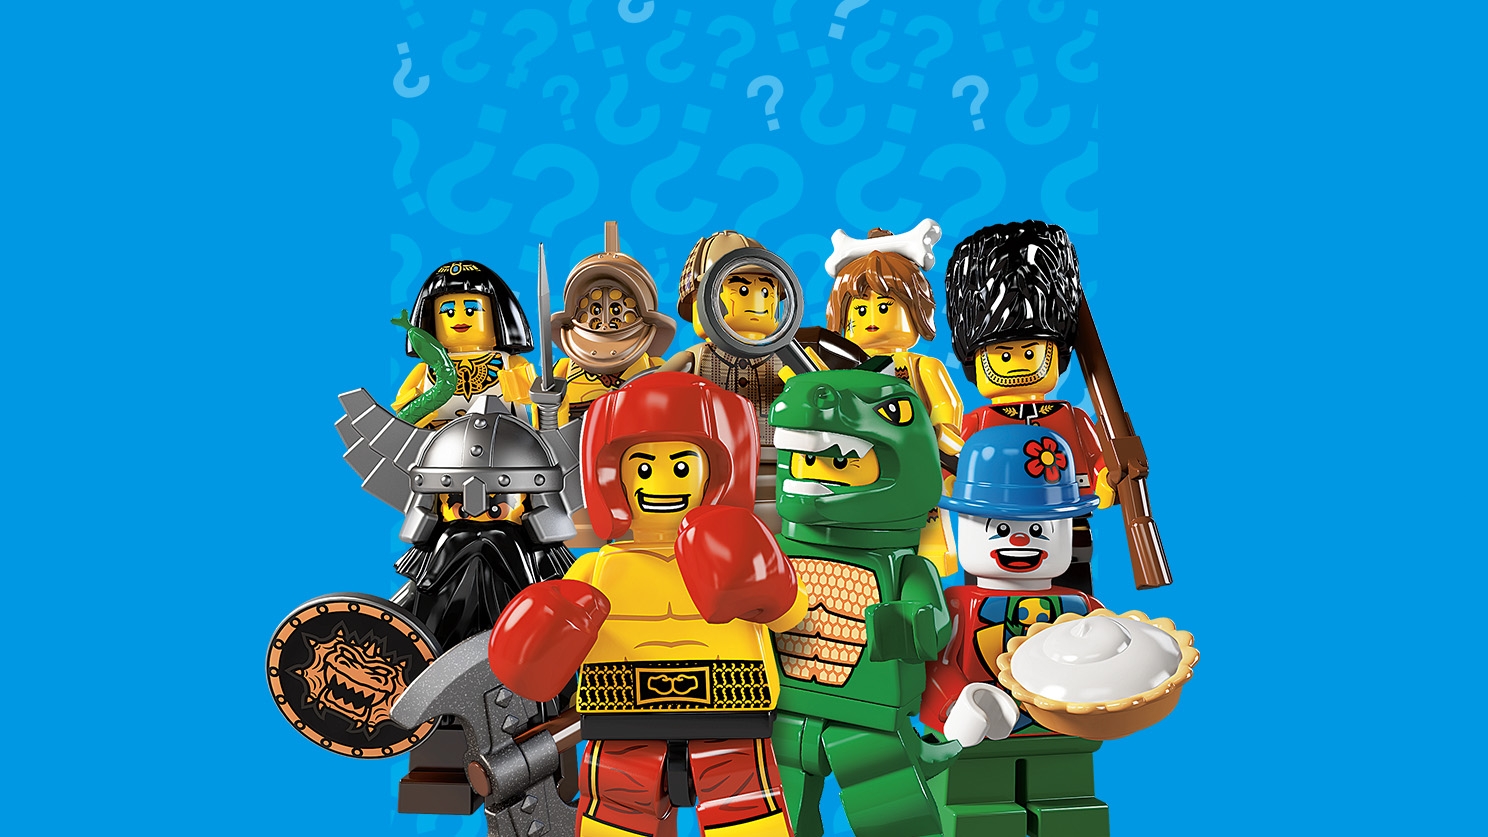 Lego SERIE 5 FIGURINE TORSE TÊTE JAMBES Minifig Torso Heads Tools Lot 8805 NEW ! 